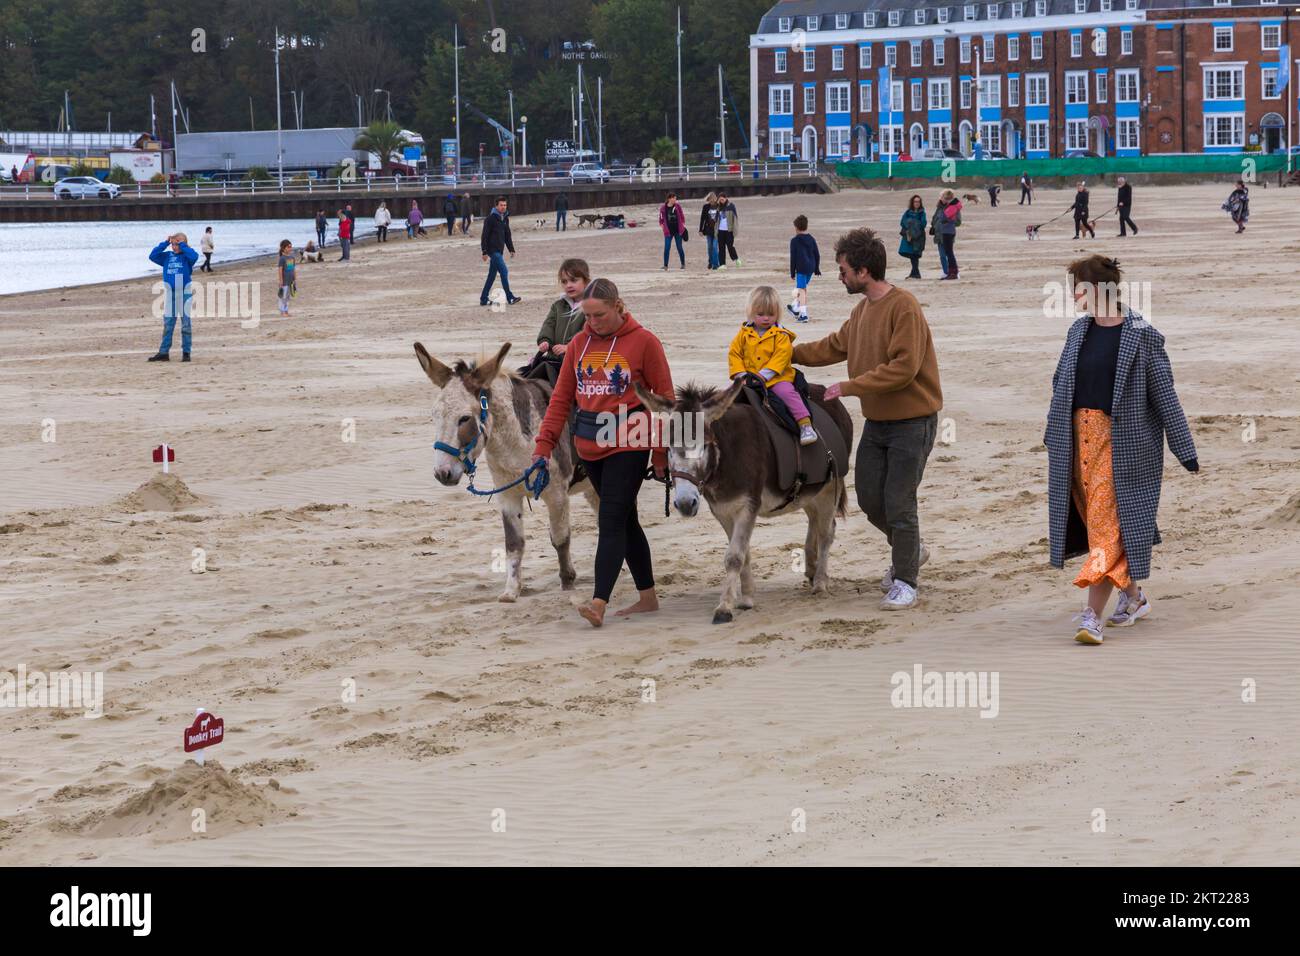 Donkey rides on Weymouth beach at Weymouth, Dorset UK in October Stock Photo